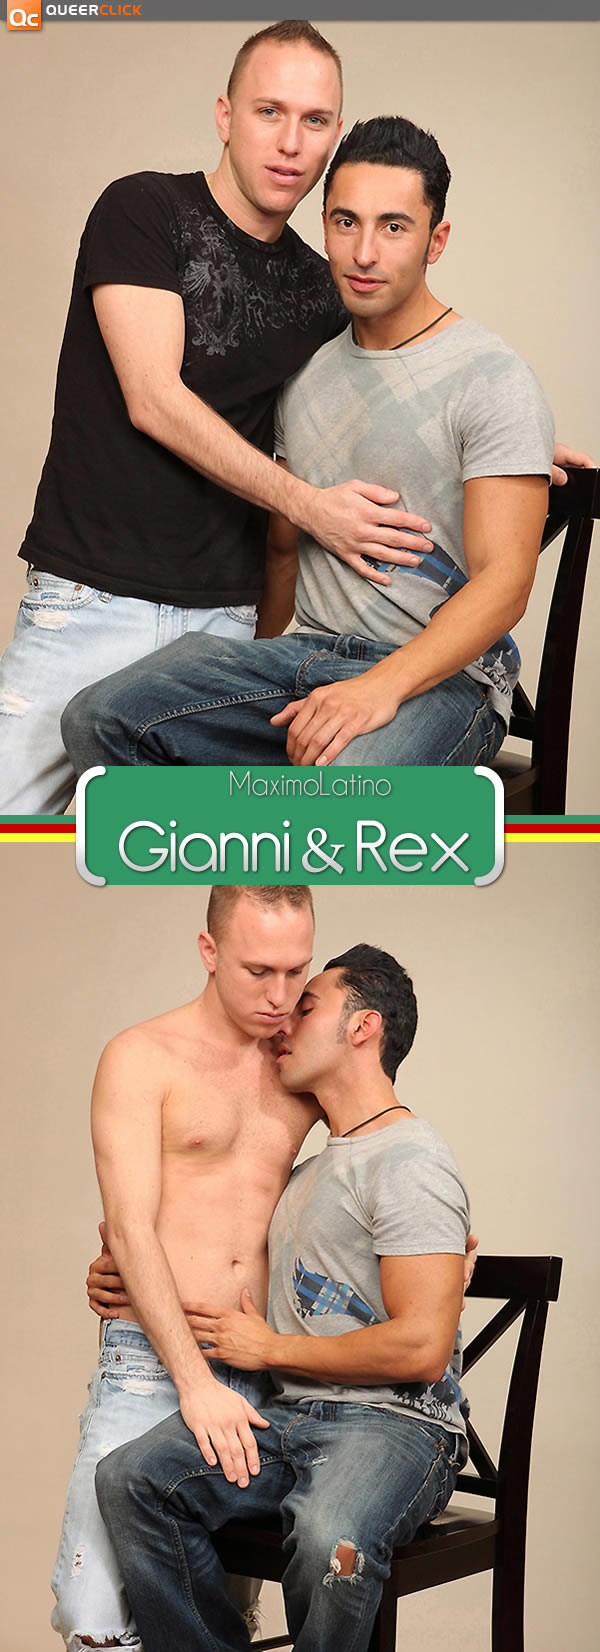 Máximo Latino: Gianni & Rex